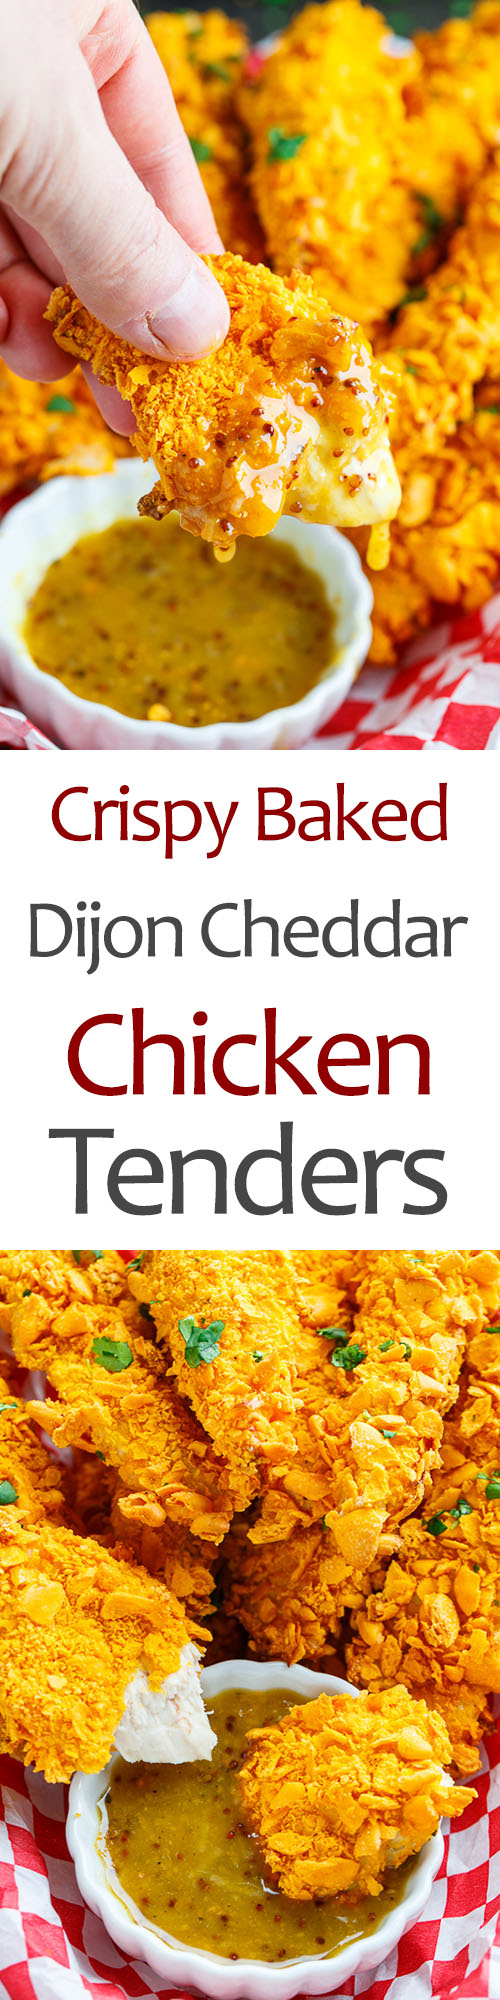 Crispy Baked Cheddar Dijon Chicken Tenders